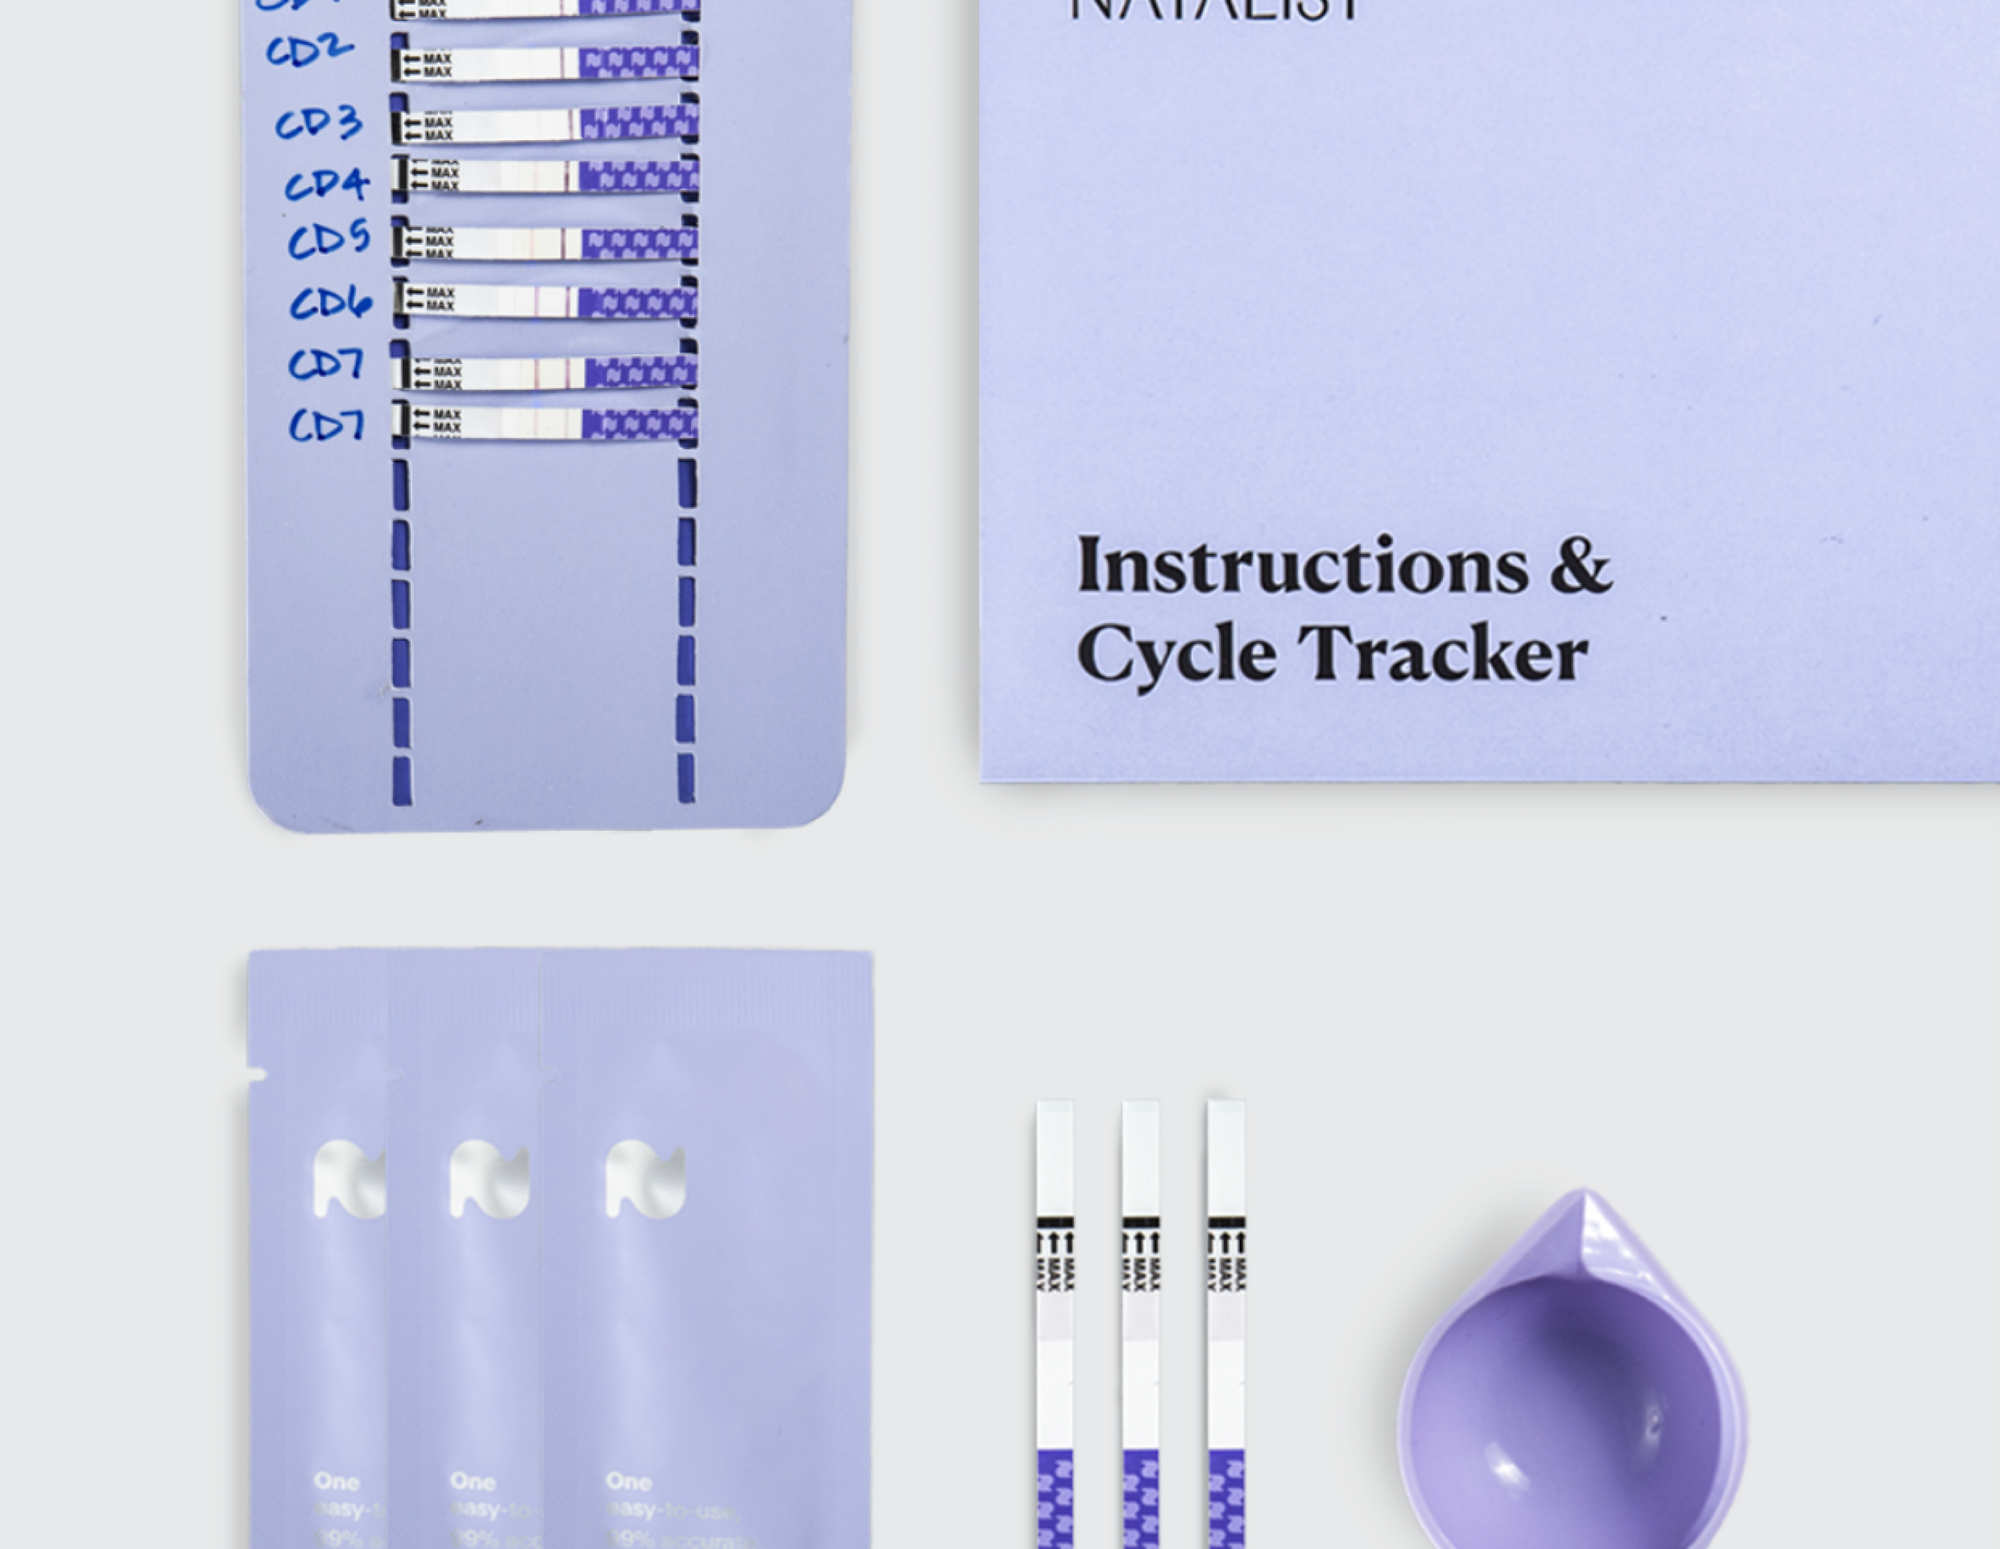 Check Ovulation Calculator & Calendar